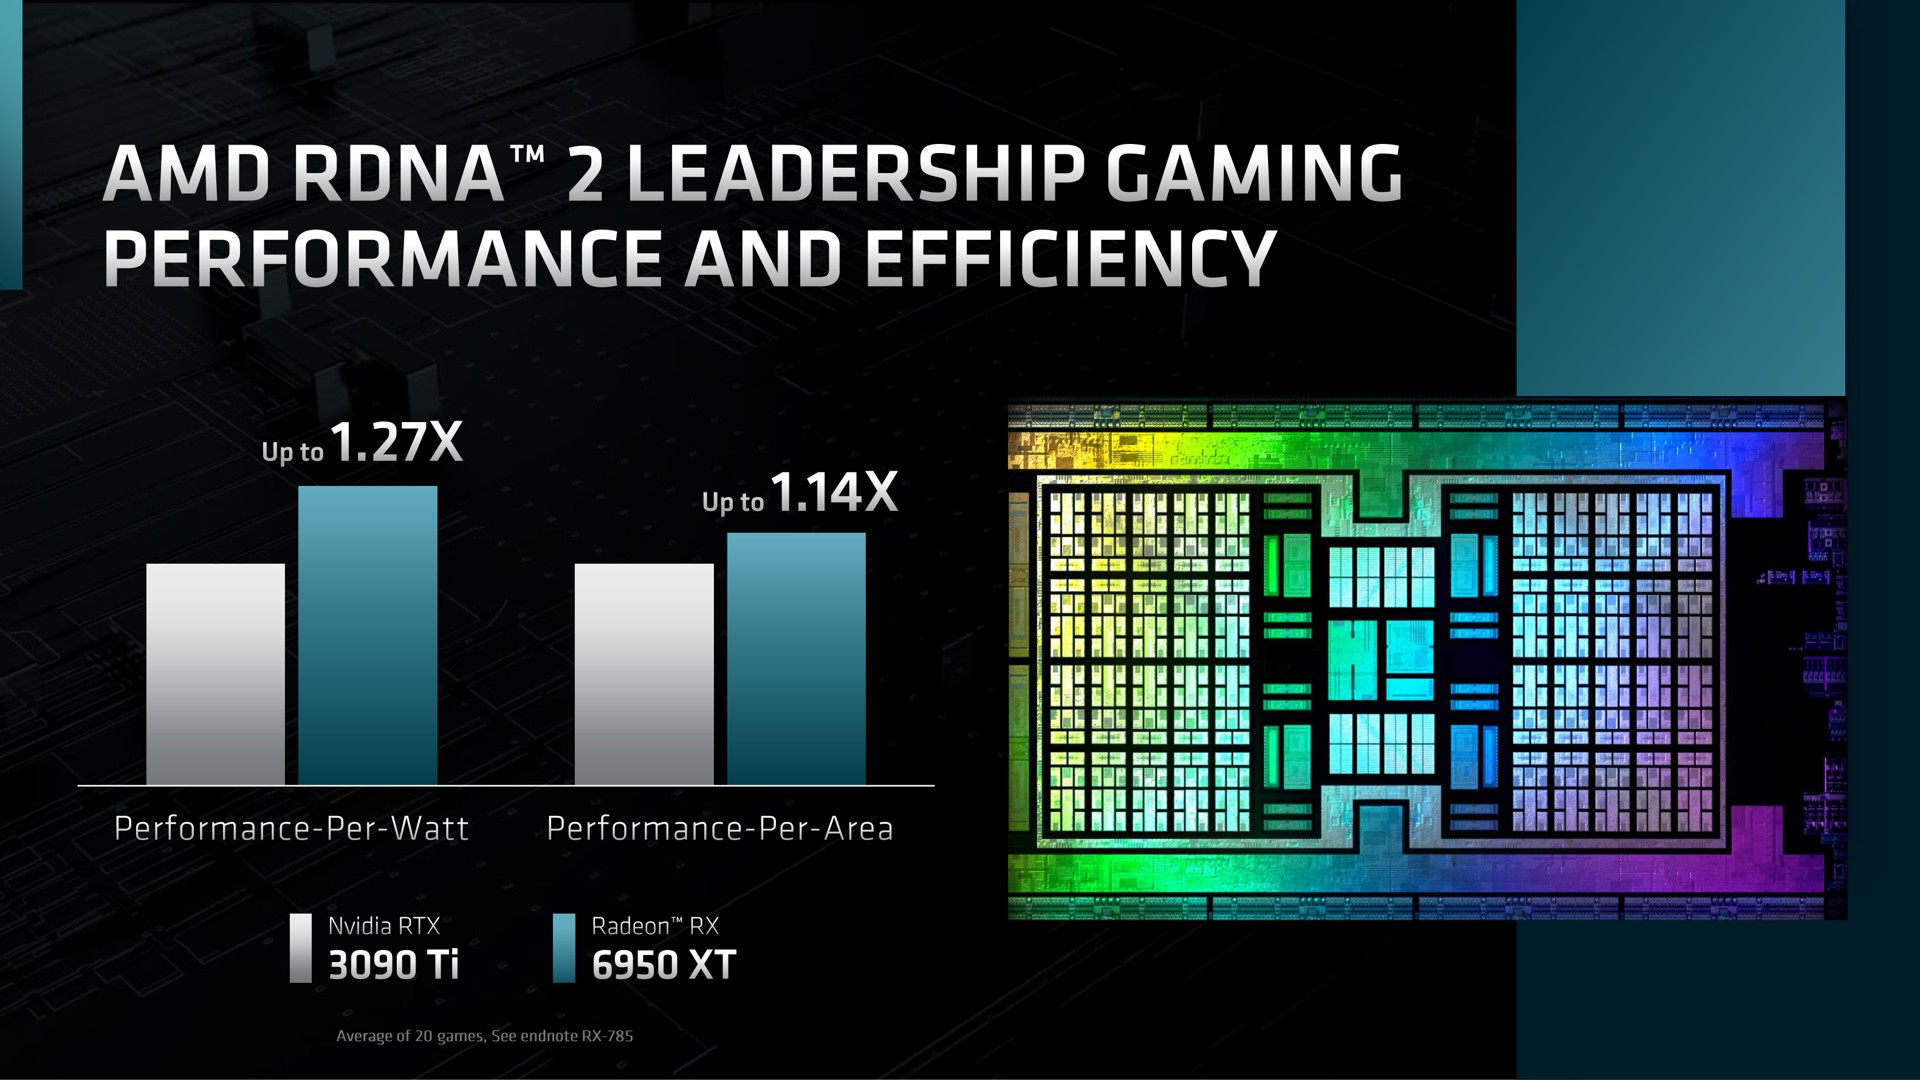 leadership gaming performance and efficiency | AMD